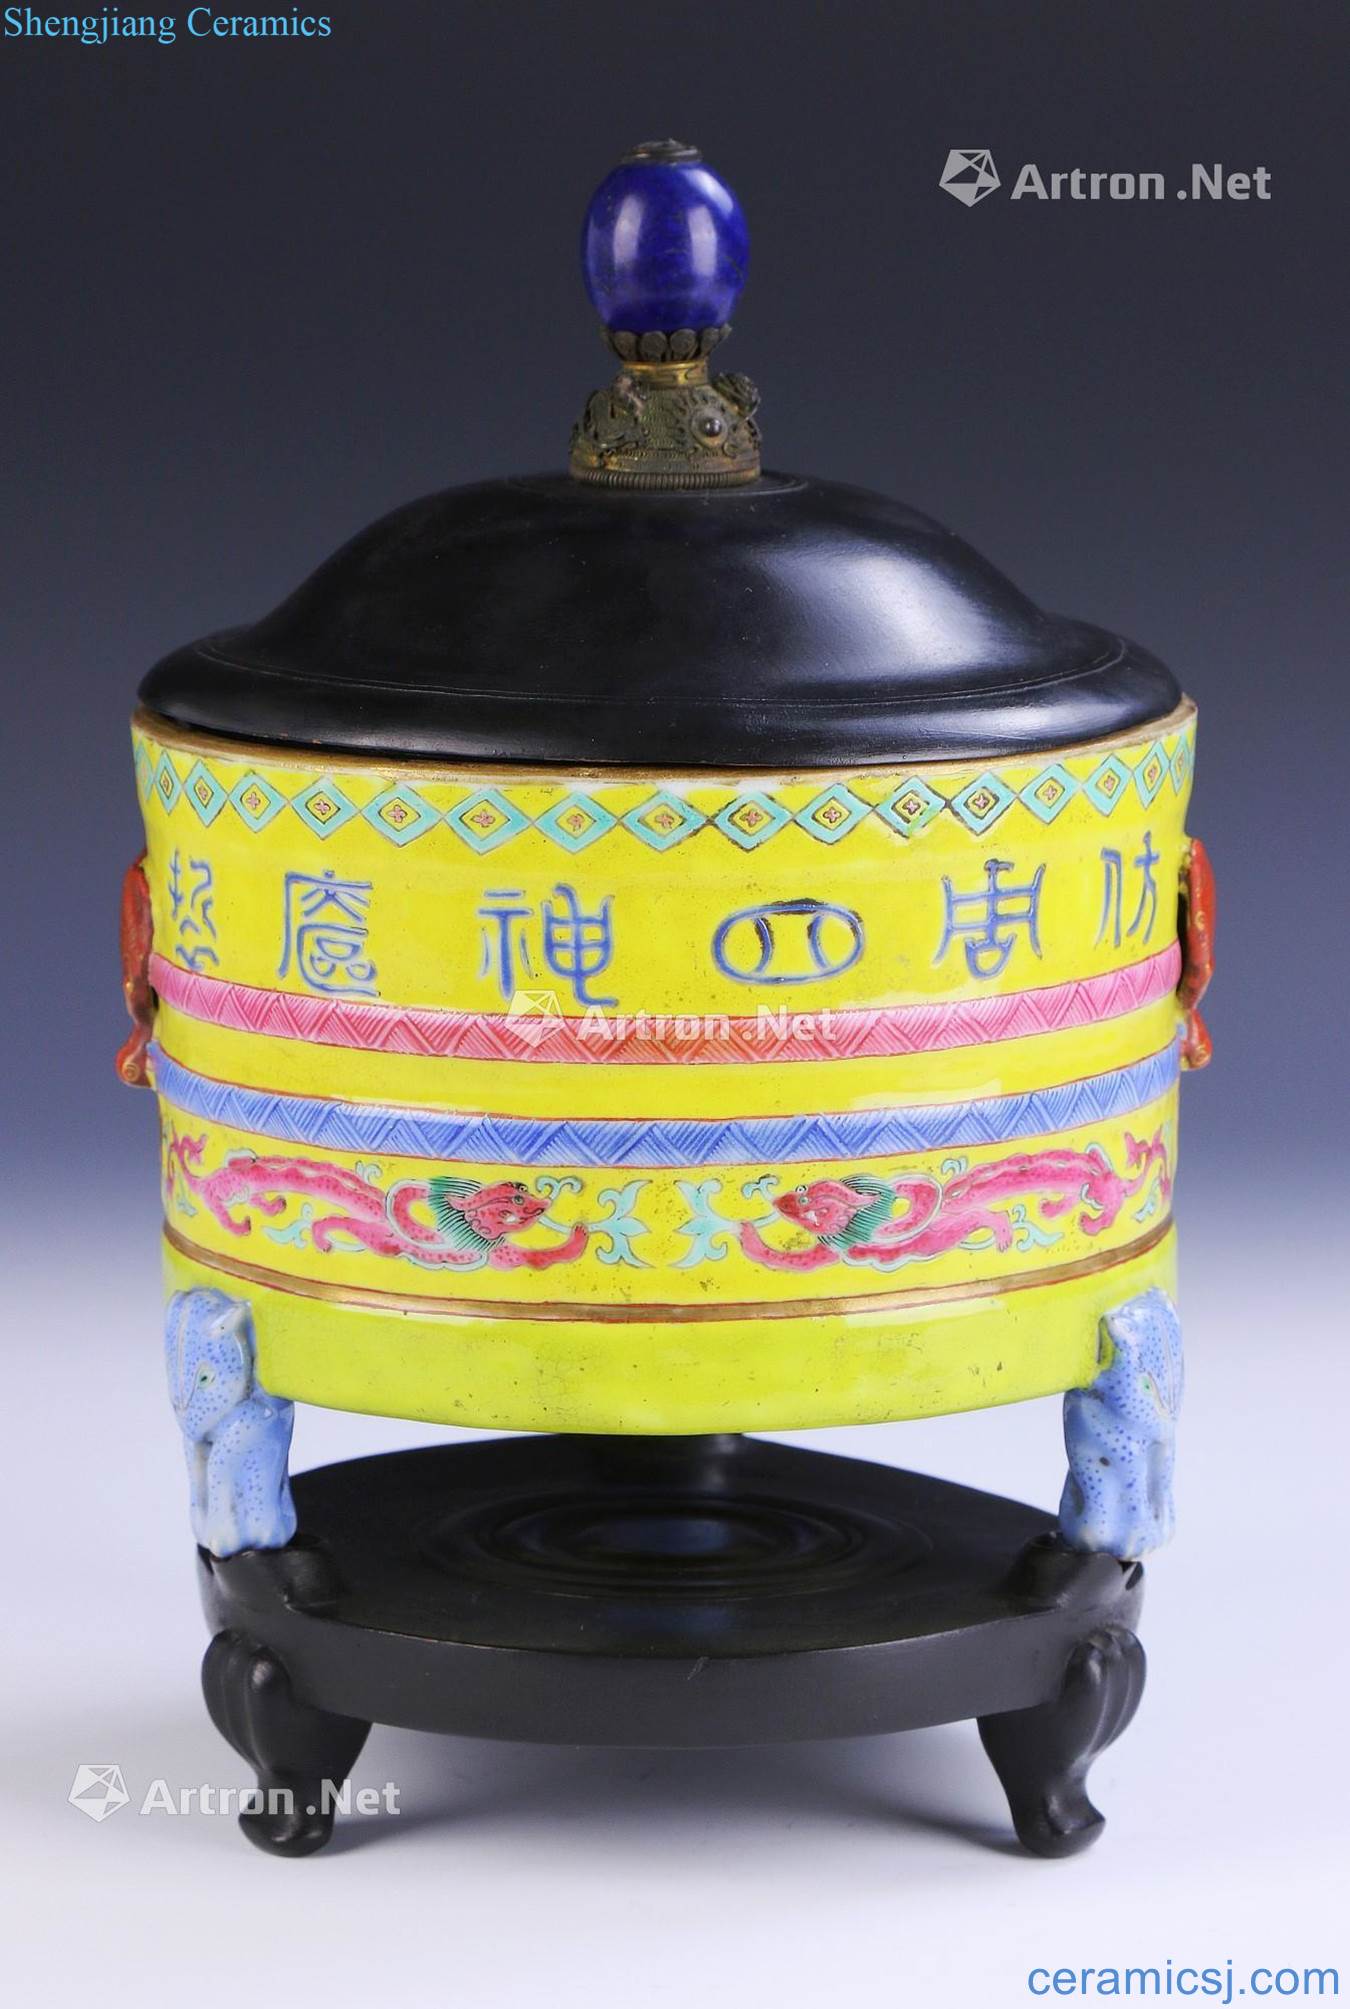 Qing daoguang enamel jewelry box type furnace